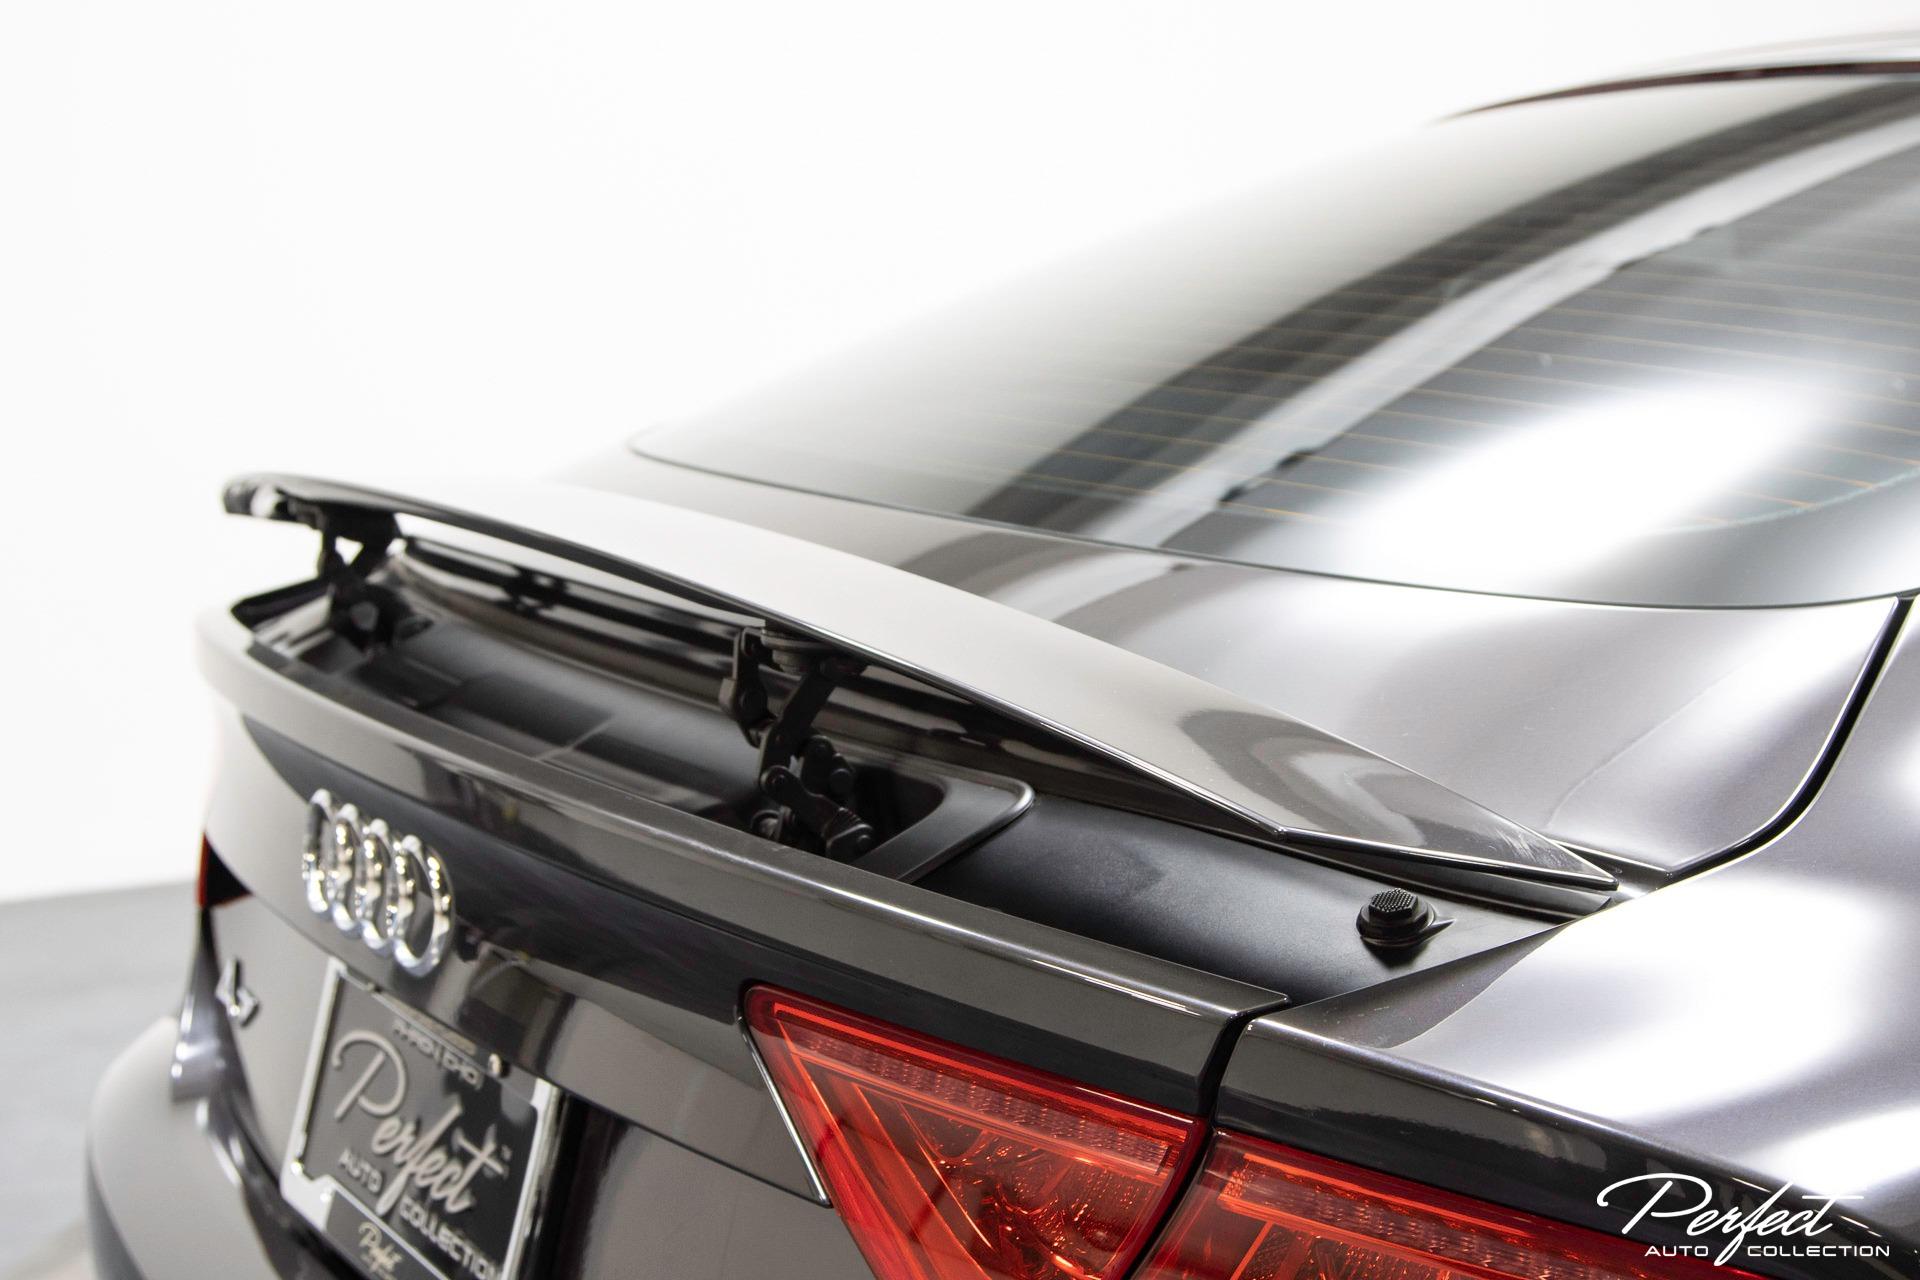 For Honda Civic Del Sol 47 Car Rear Trunk Racing Adjustable GT Wing Spoiler  US